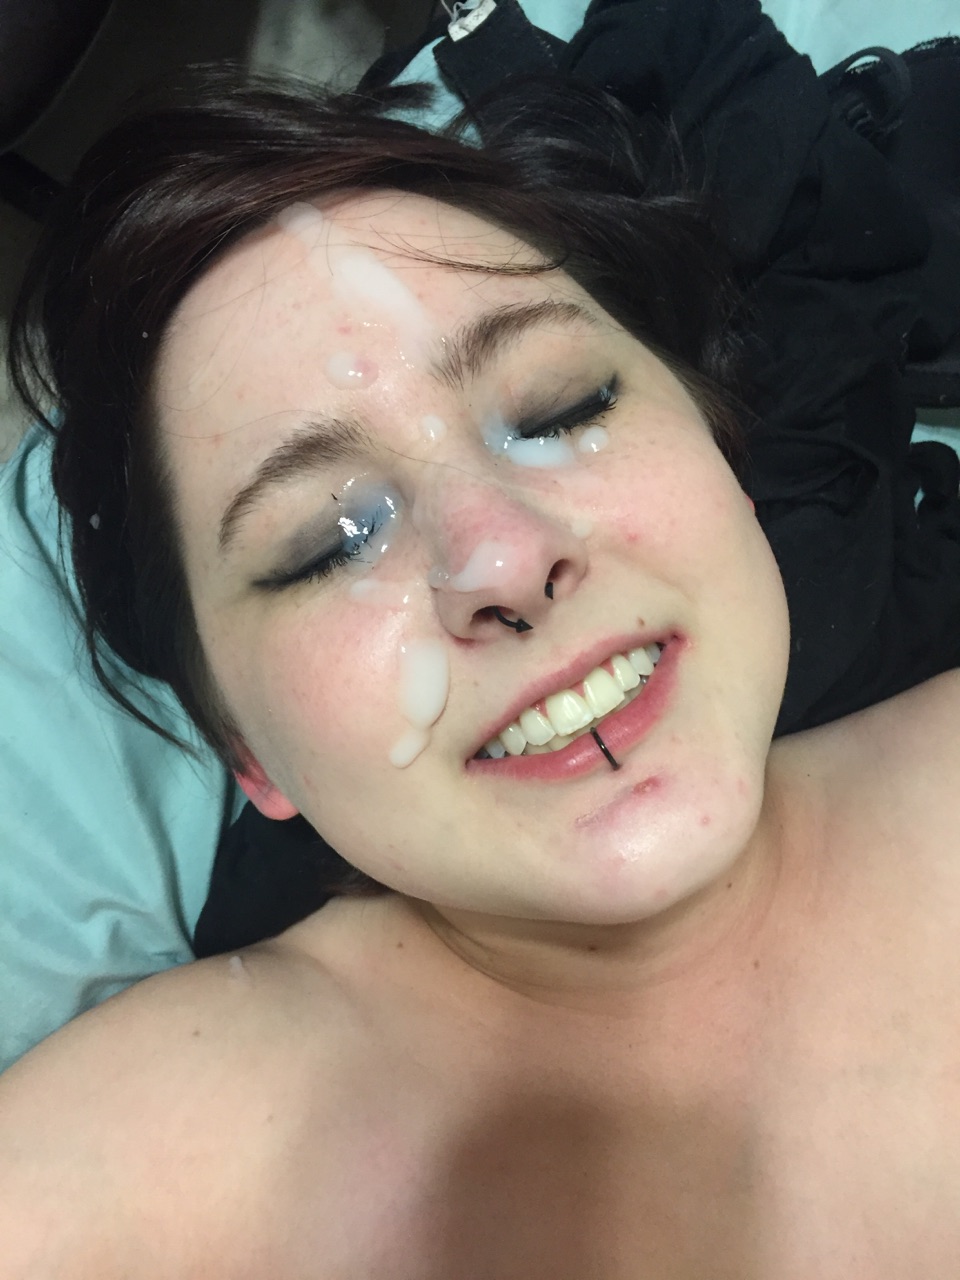 Goth girl get facial Porn Pic - EPORNER